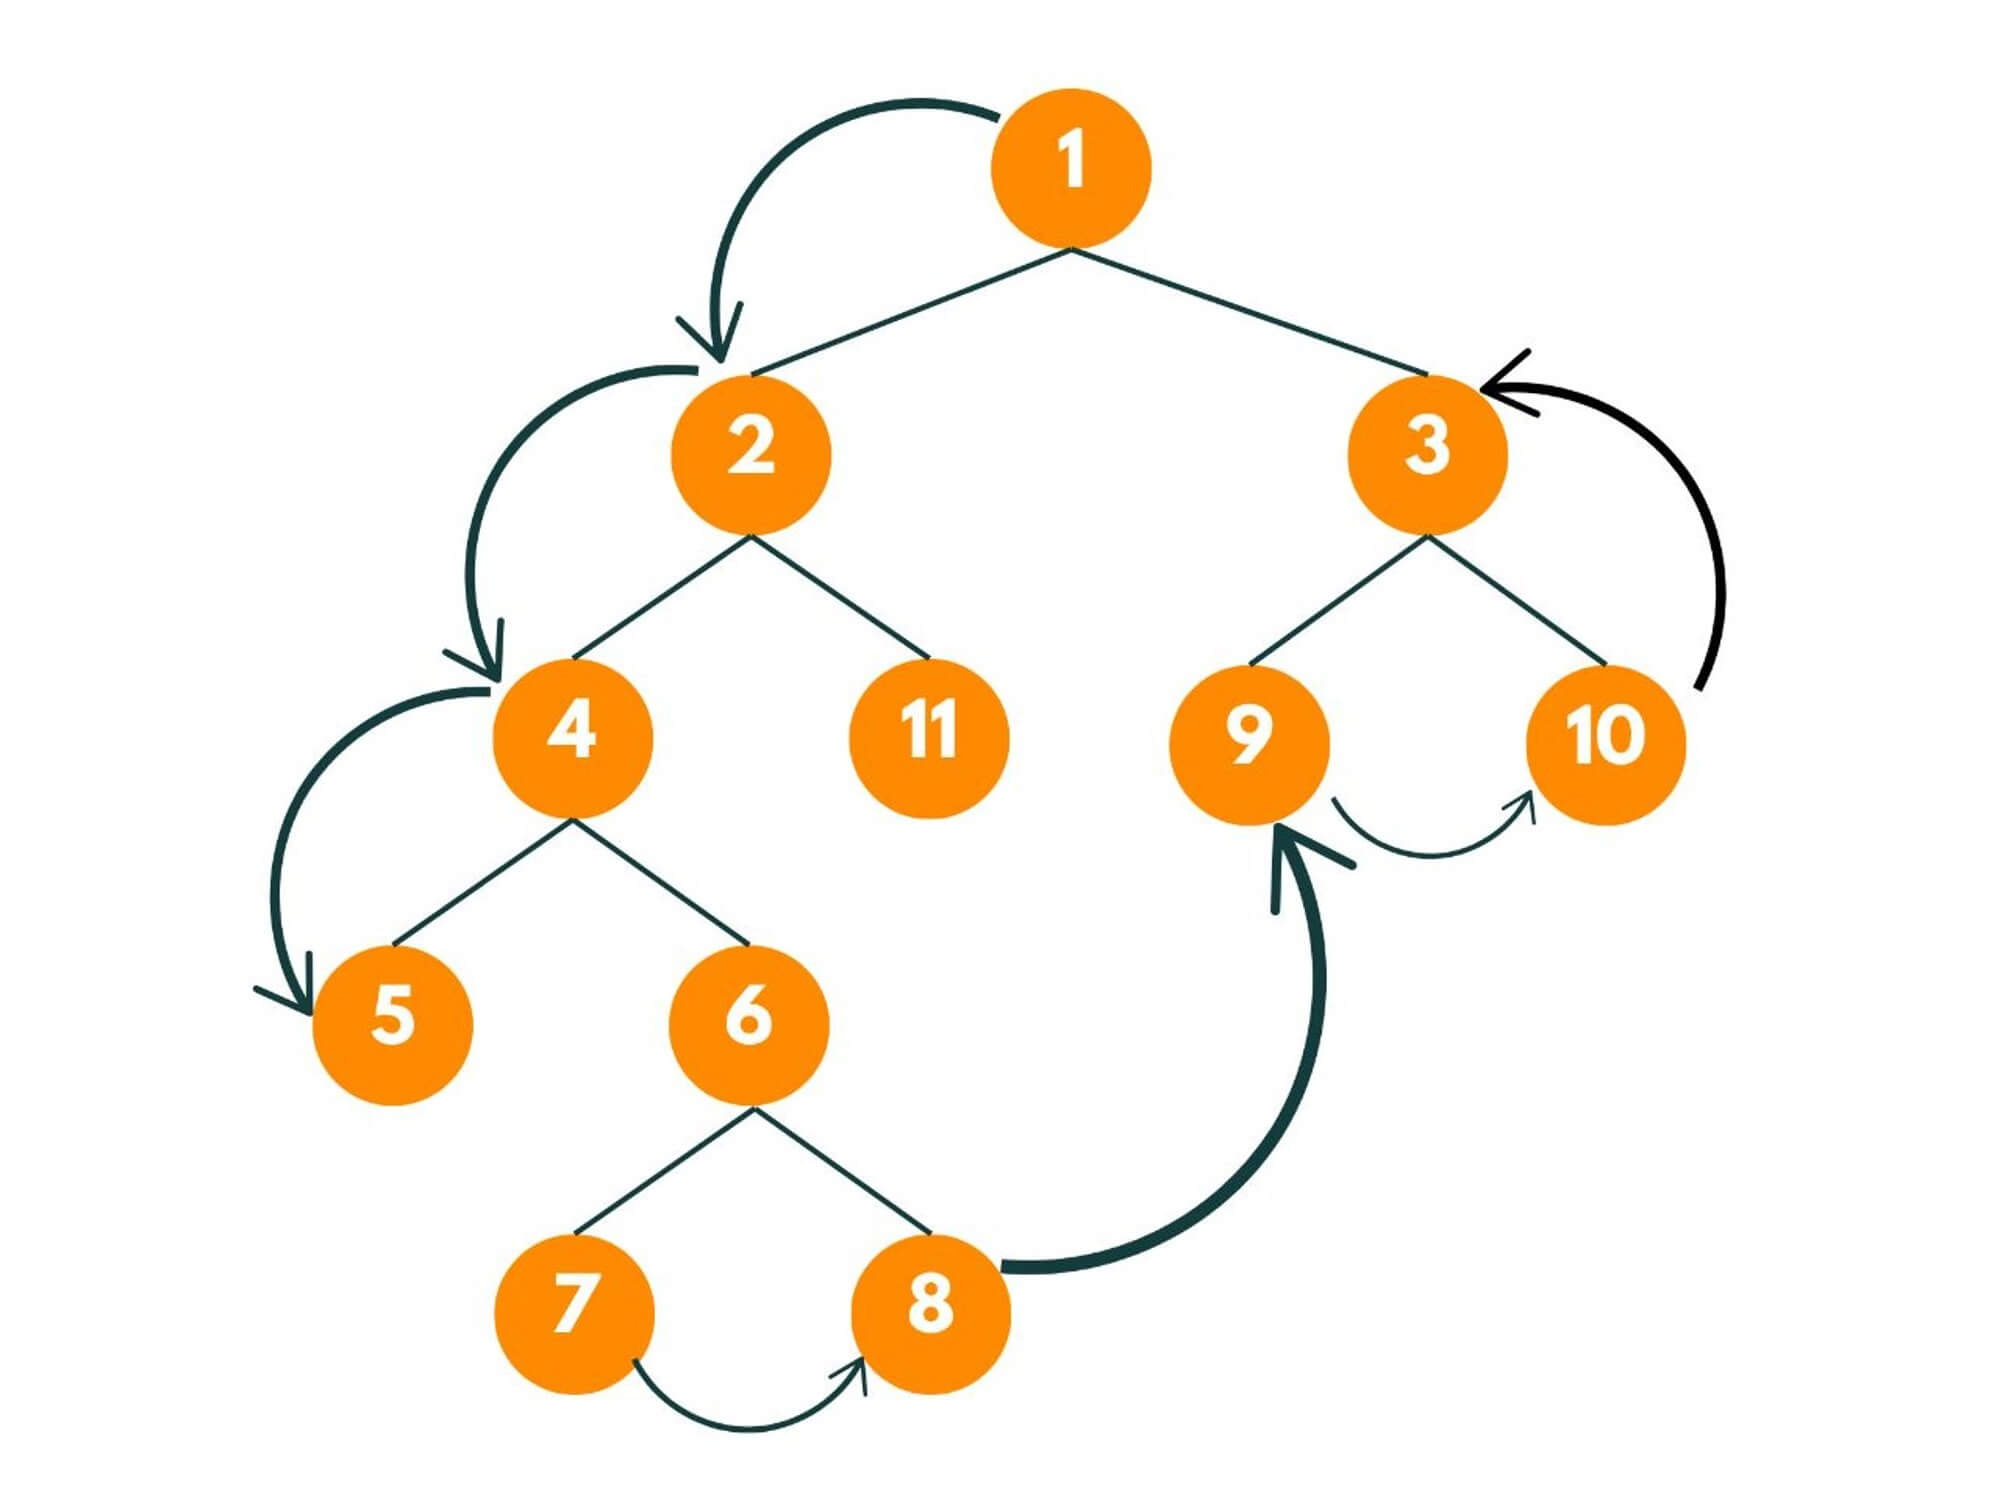 boundary traveral of a binary tree